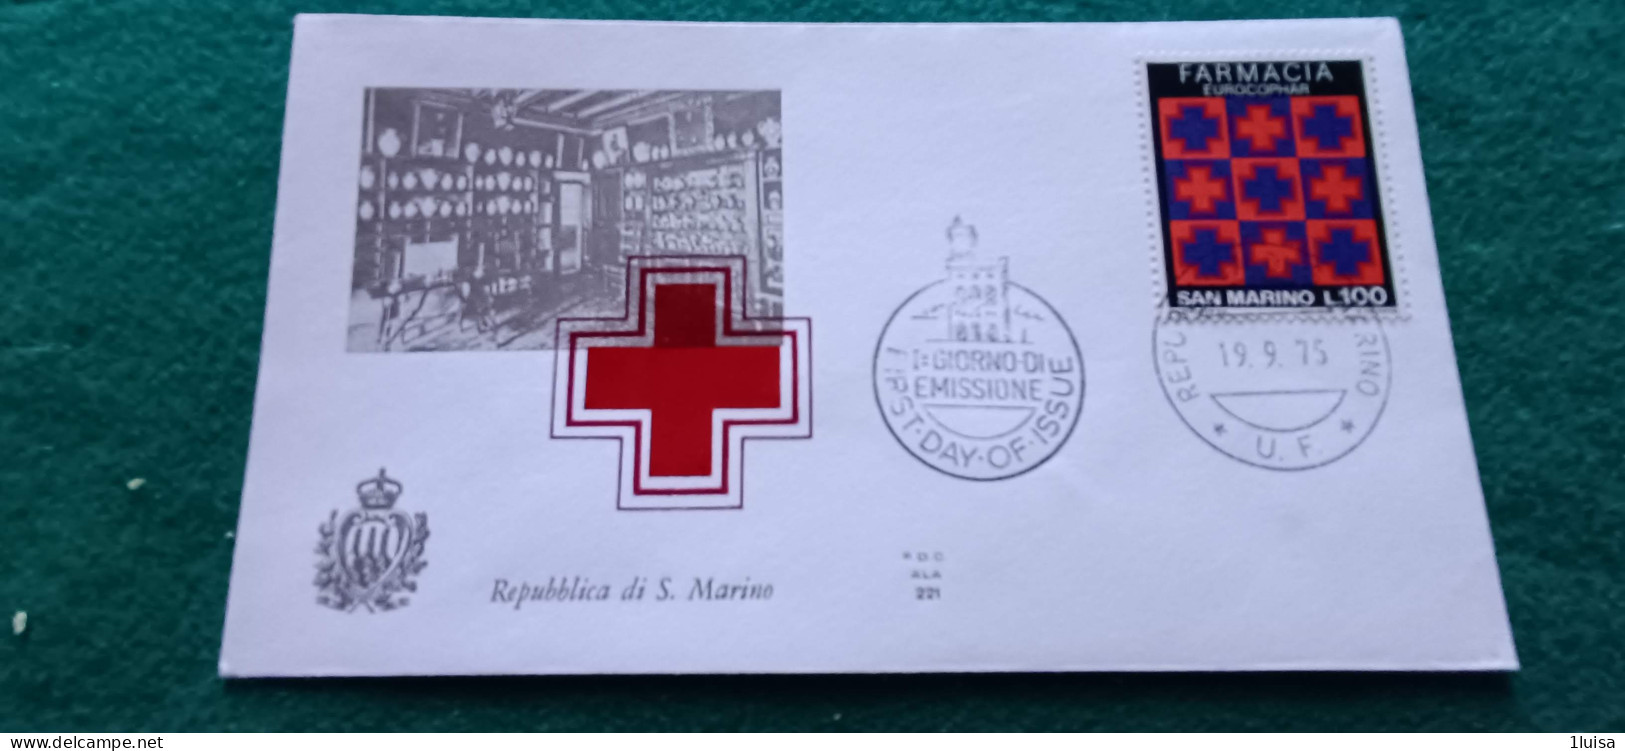 SAN MARINO 19/9/75 Croce Rossa Farmacia - Express Letter Stamps